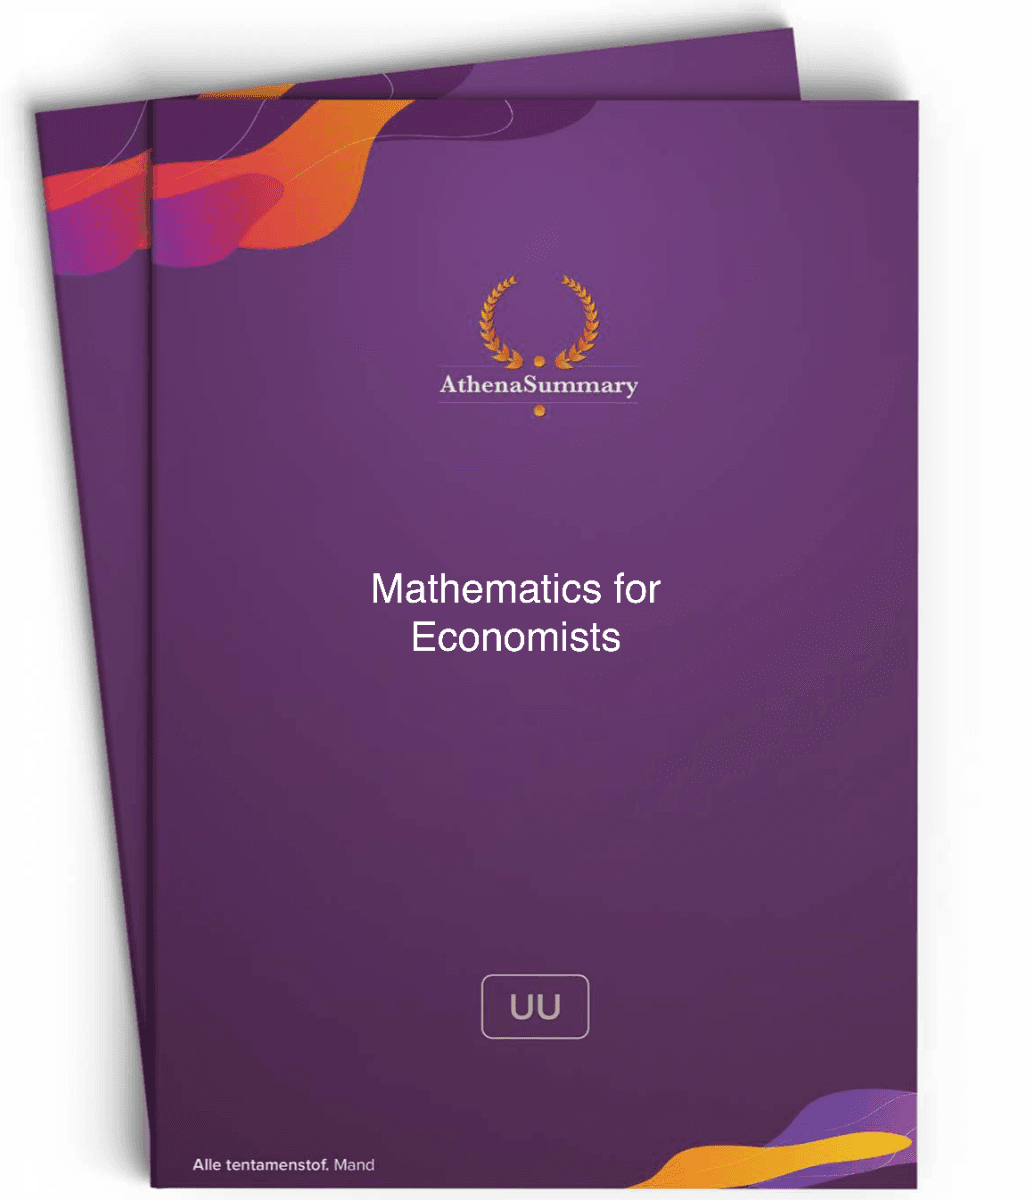 Literature Summary: Mathematics for Economists